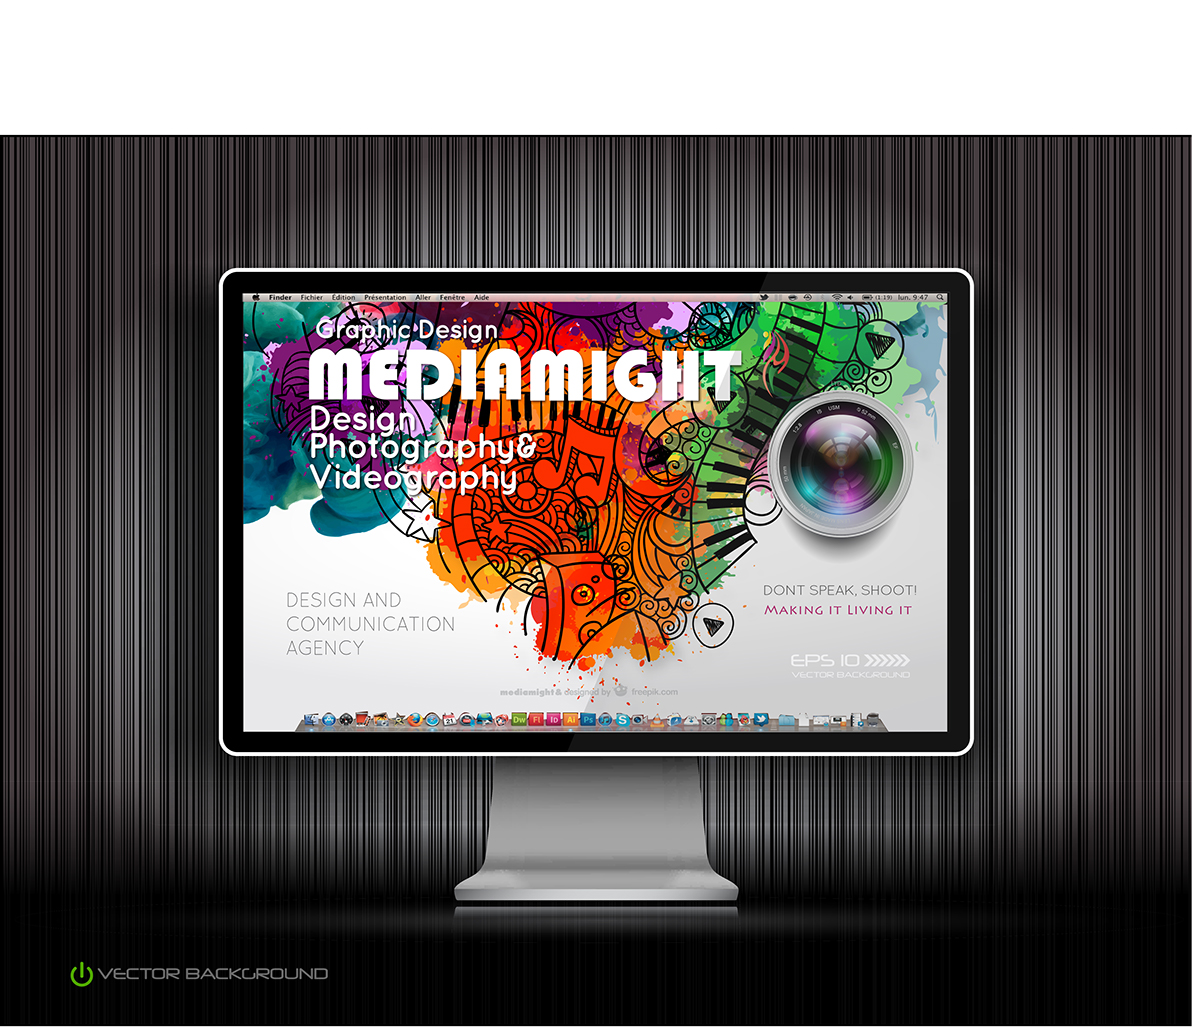 MediaMight design